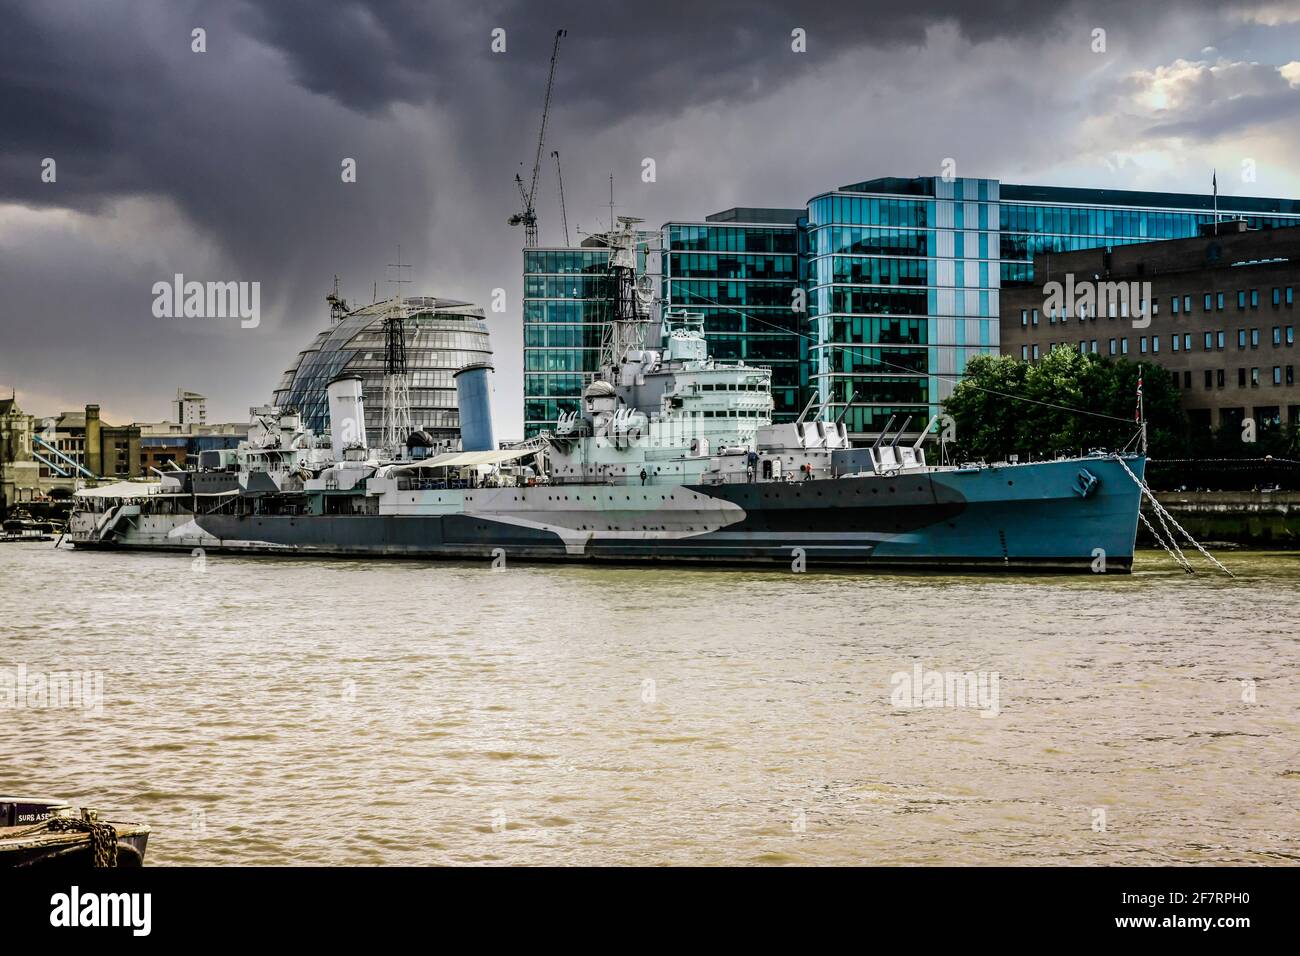 HMS Belfast battleship moared on the Thames in London Stock Photo